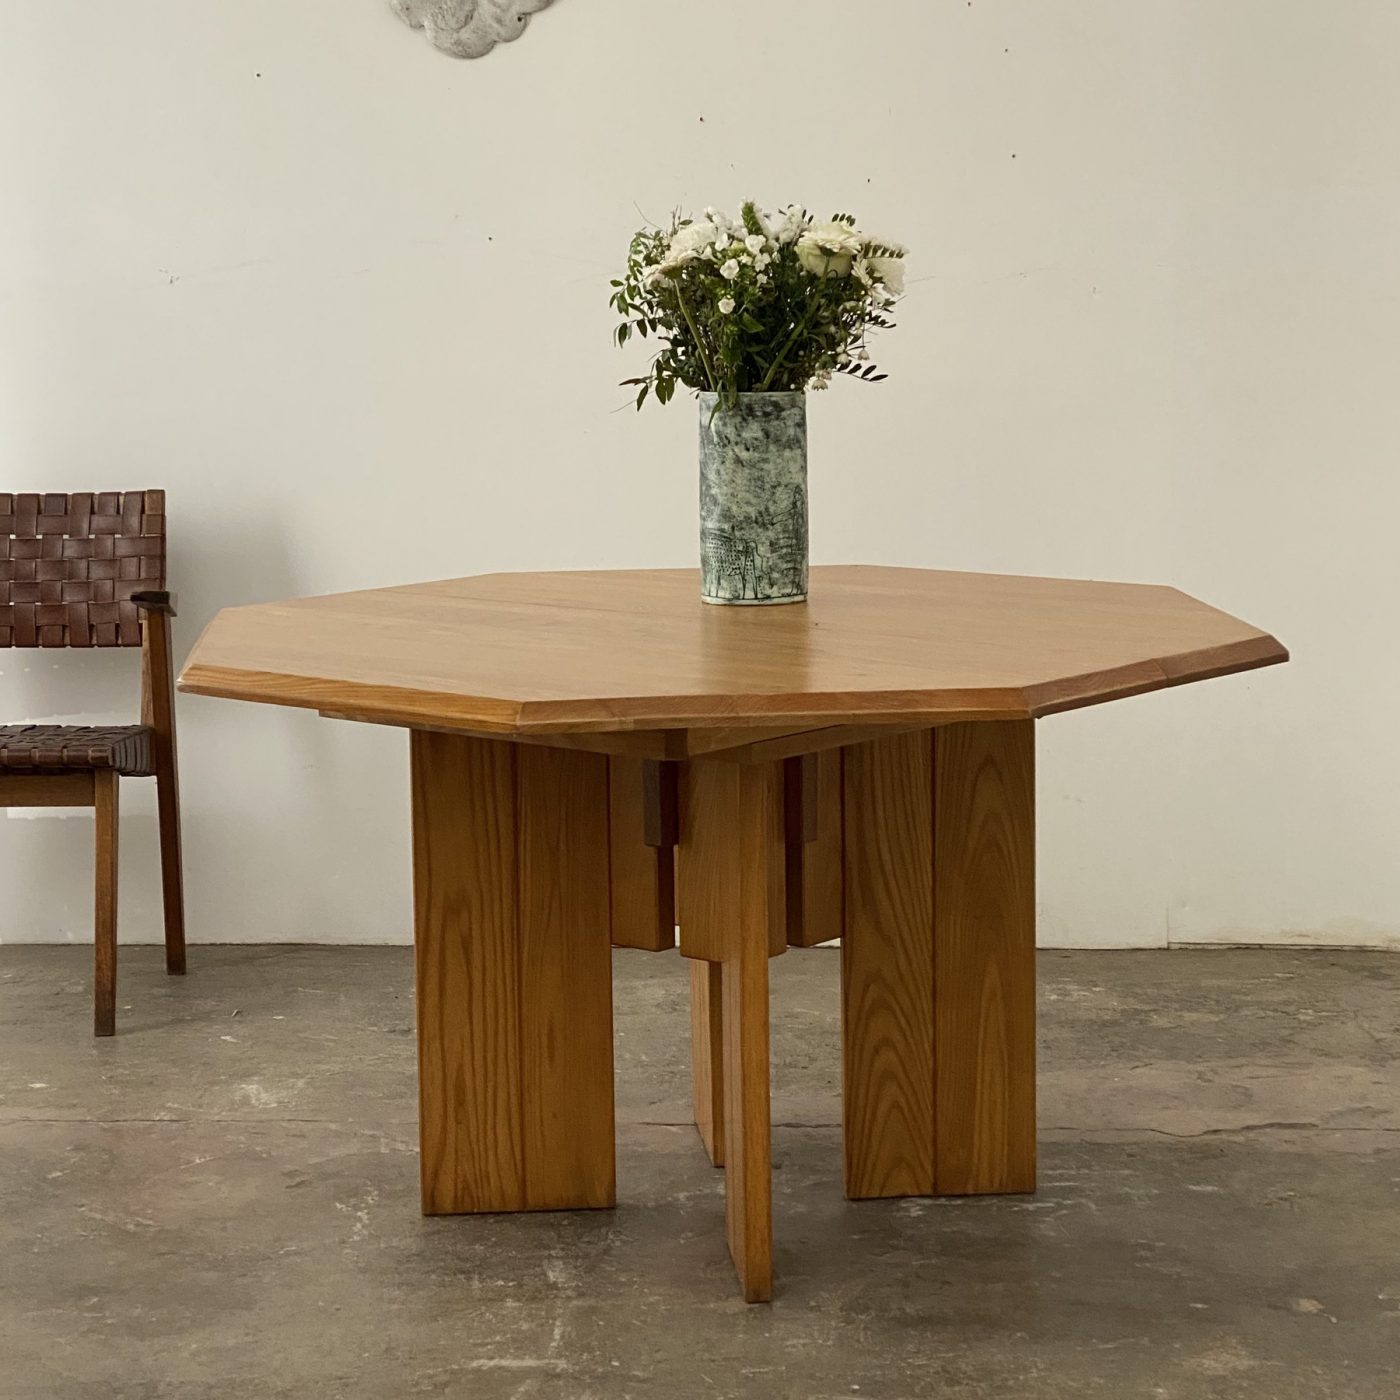 objet-vagabond-elm-wood-table0002